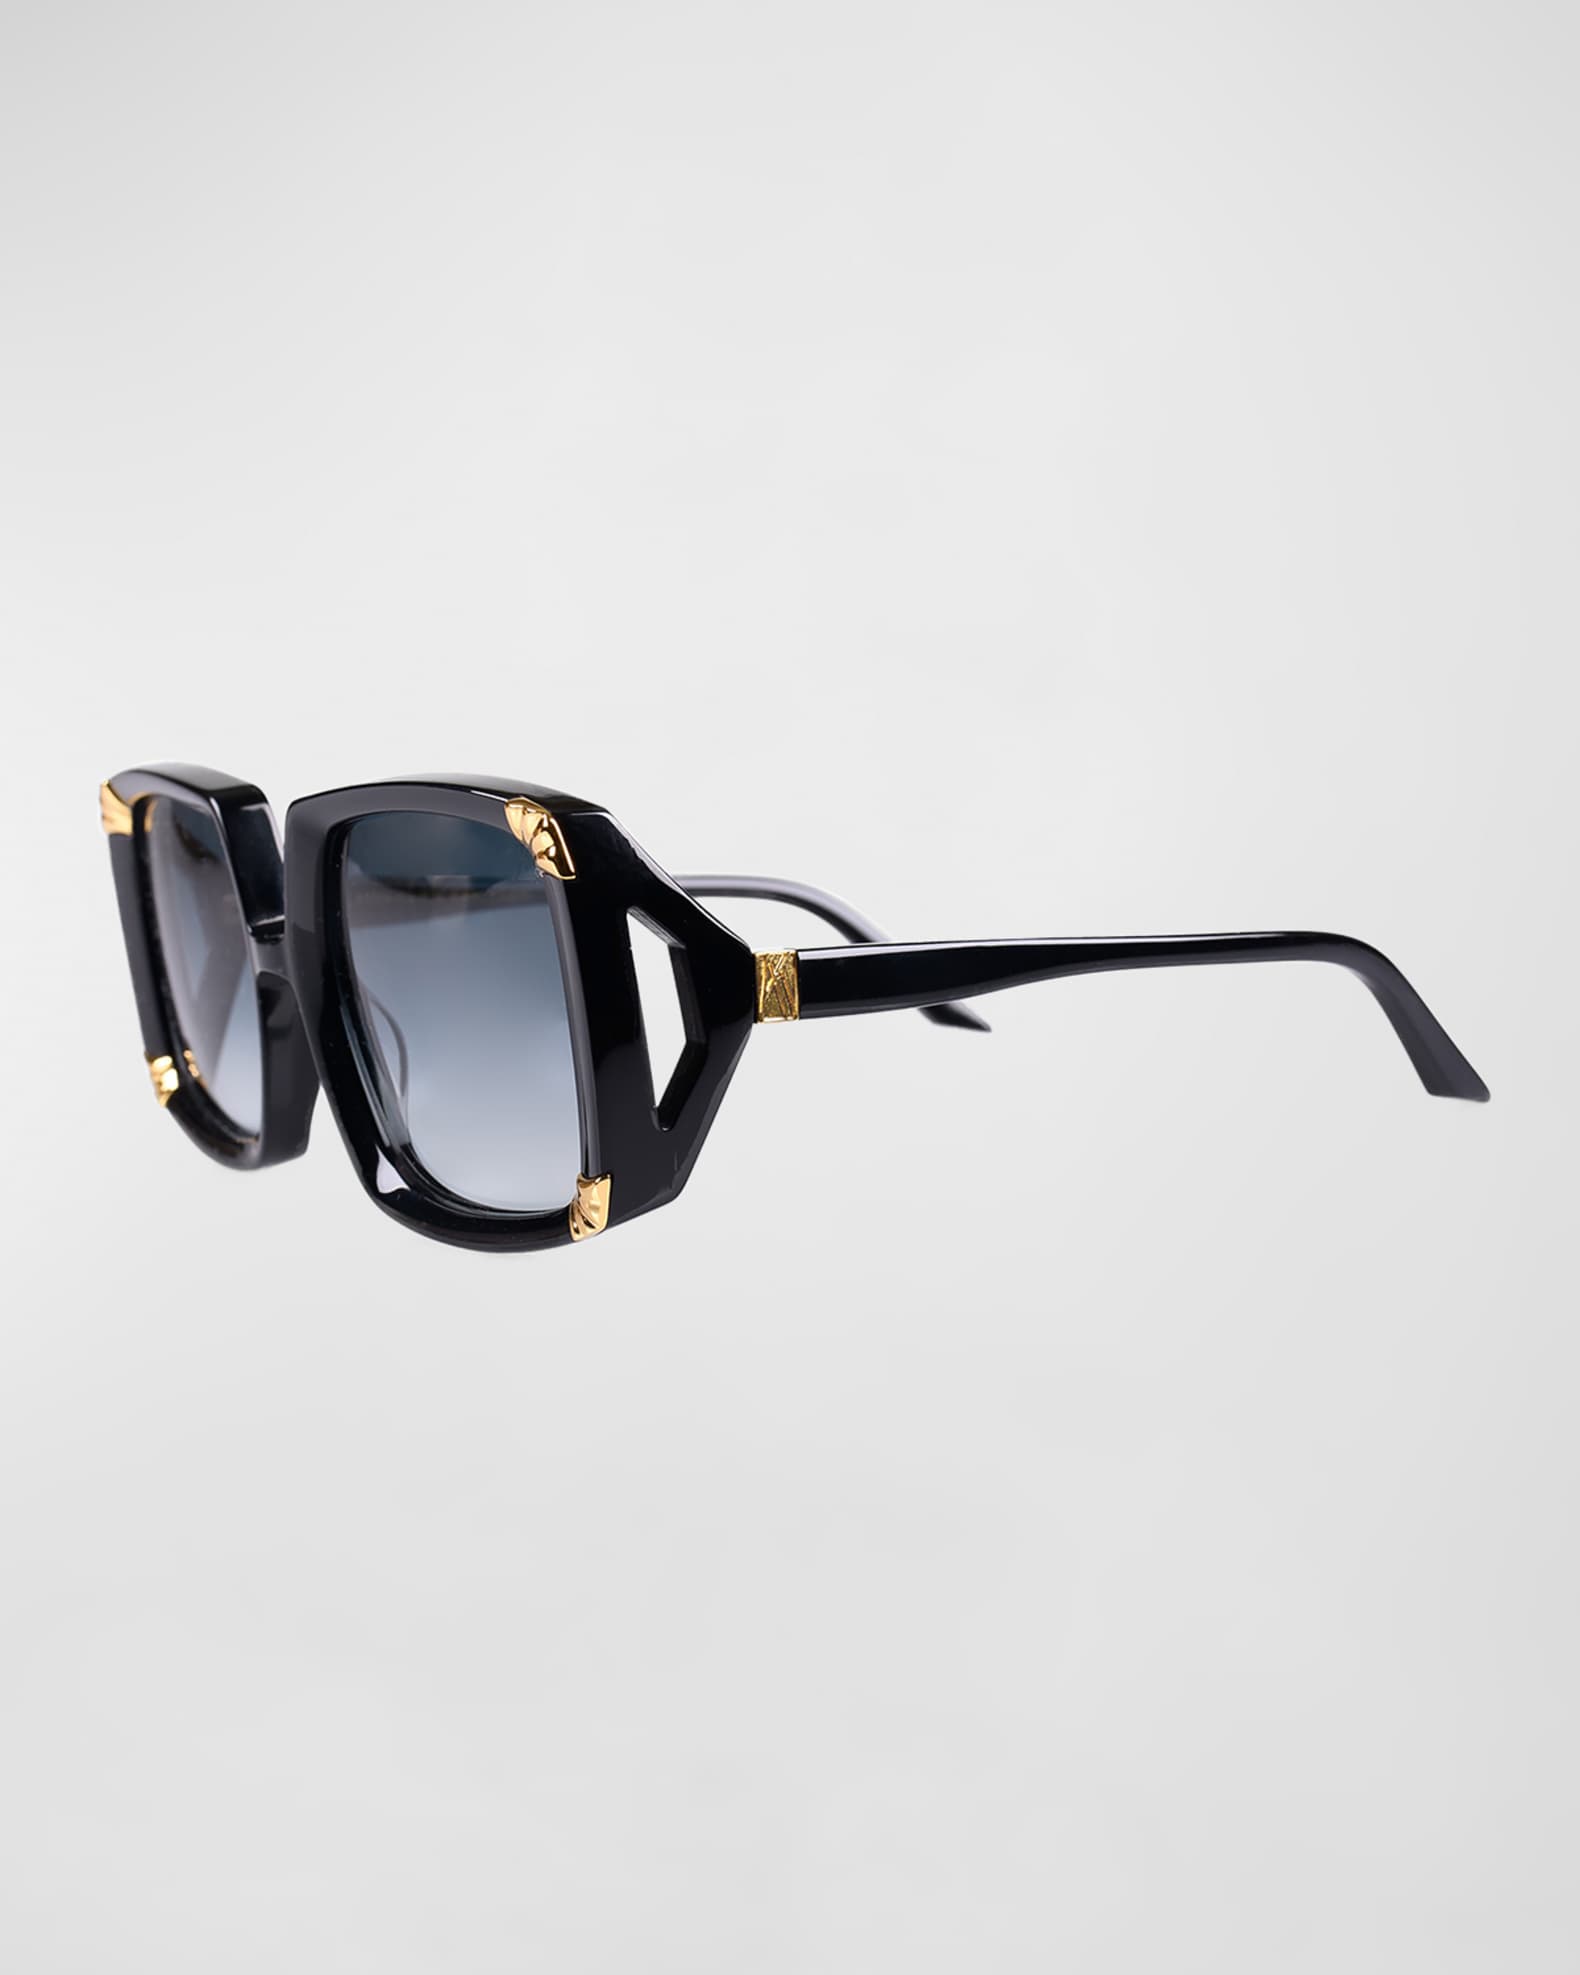 Dana Rectangular Sunglasses in Silver frame by The Attico x LINDA FARROW –  LINDA FARROW (INT'L)